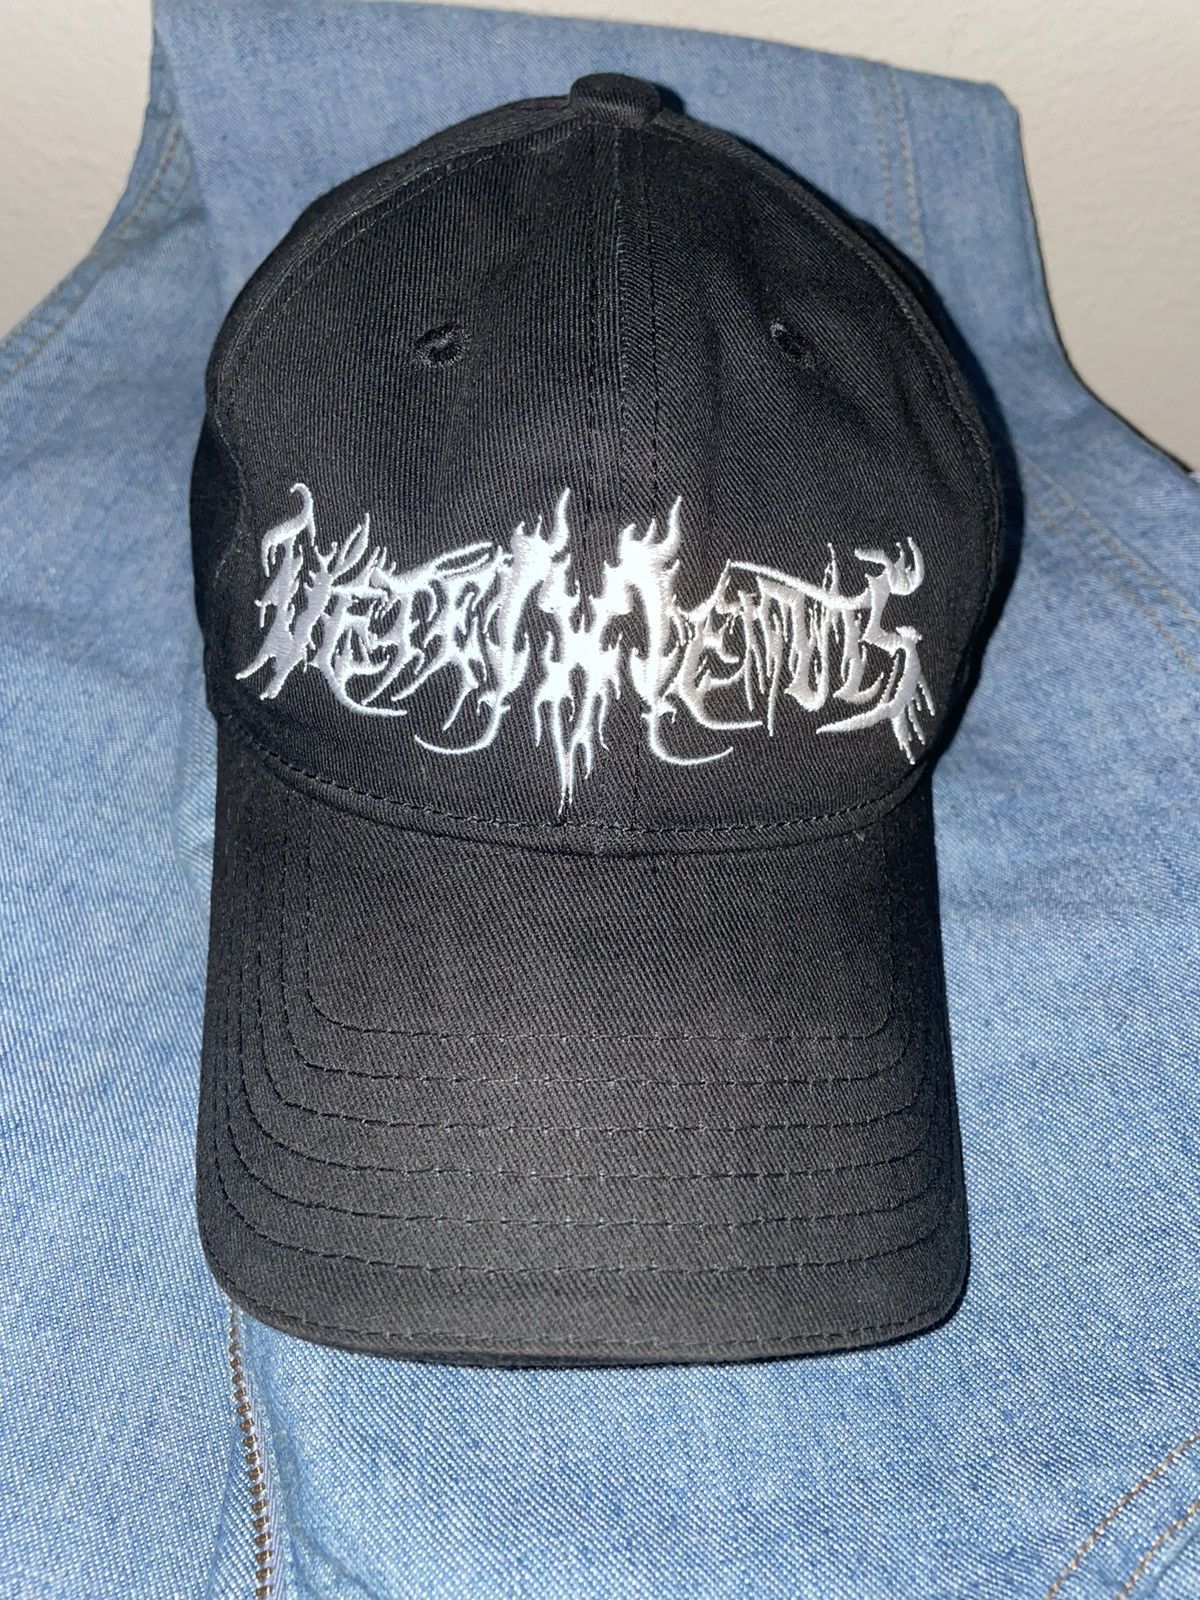 Vetements Vetements Metal Goth Logo Cap | Grailed